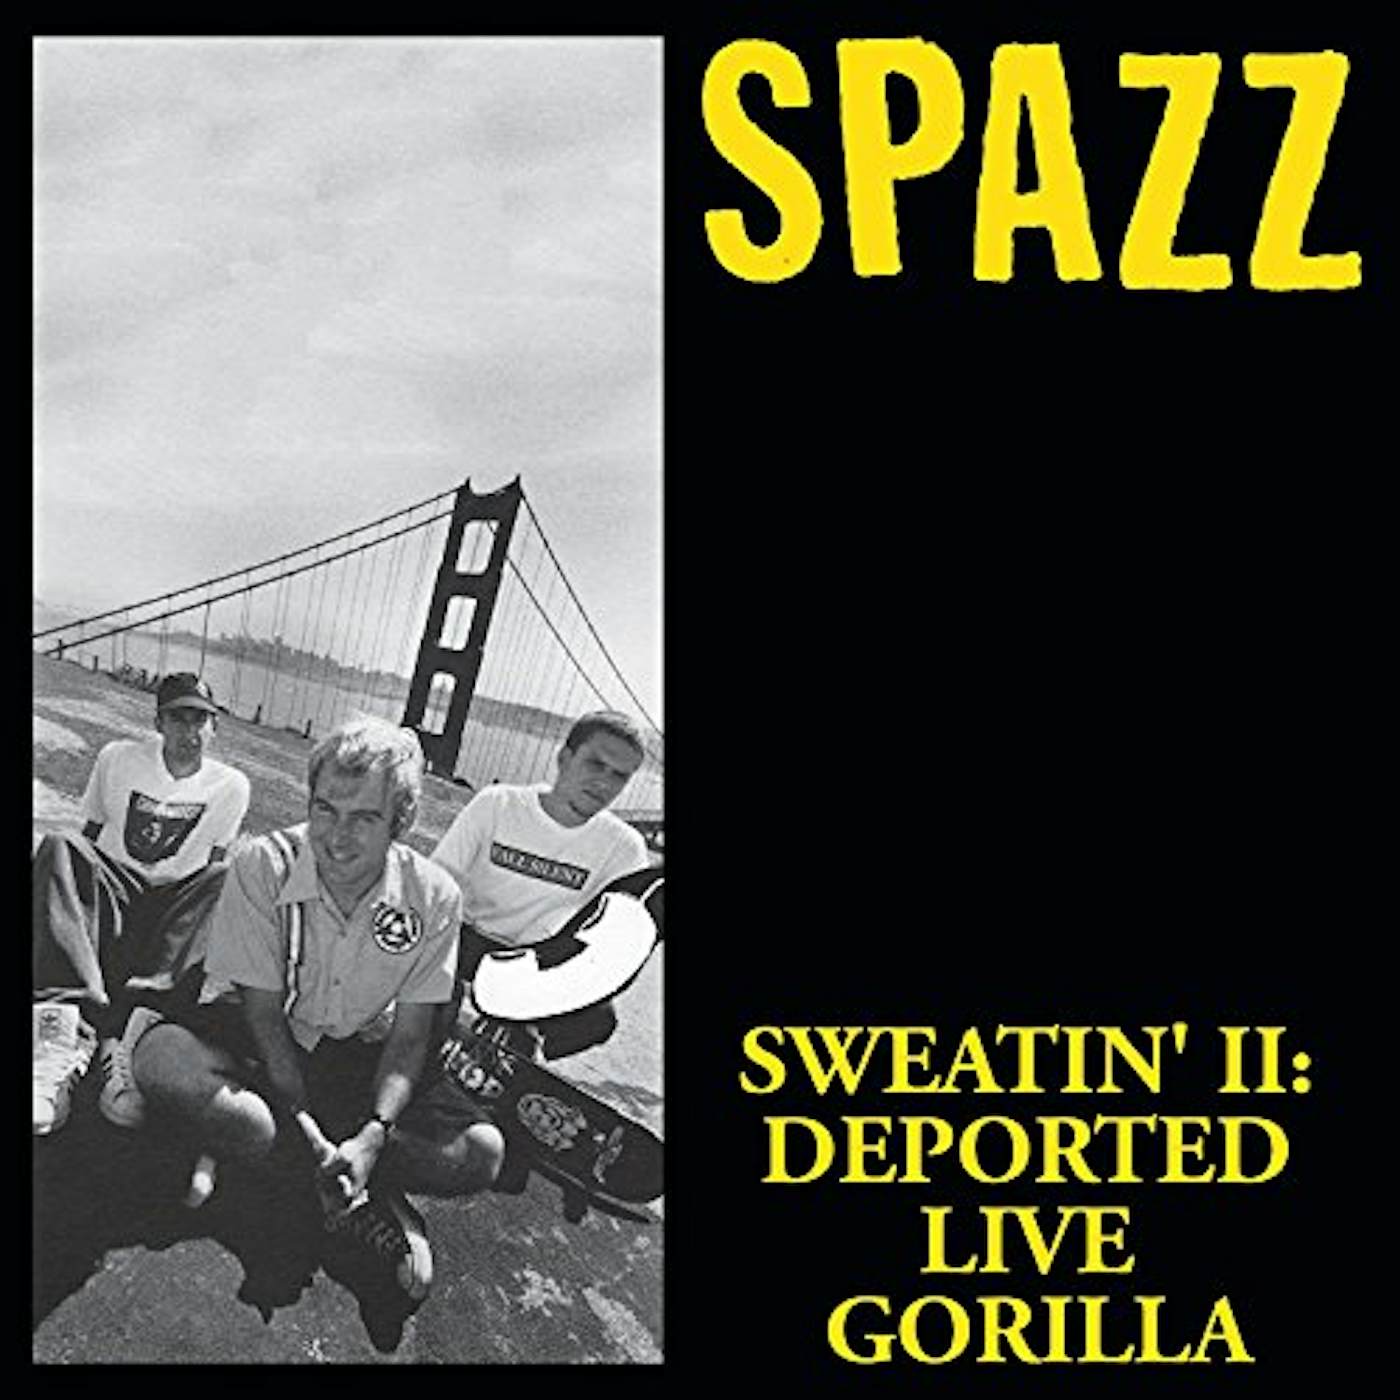 Spazz SWEATIN' II: DEPORTED LIVE GORILLA CD